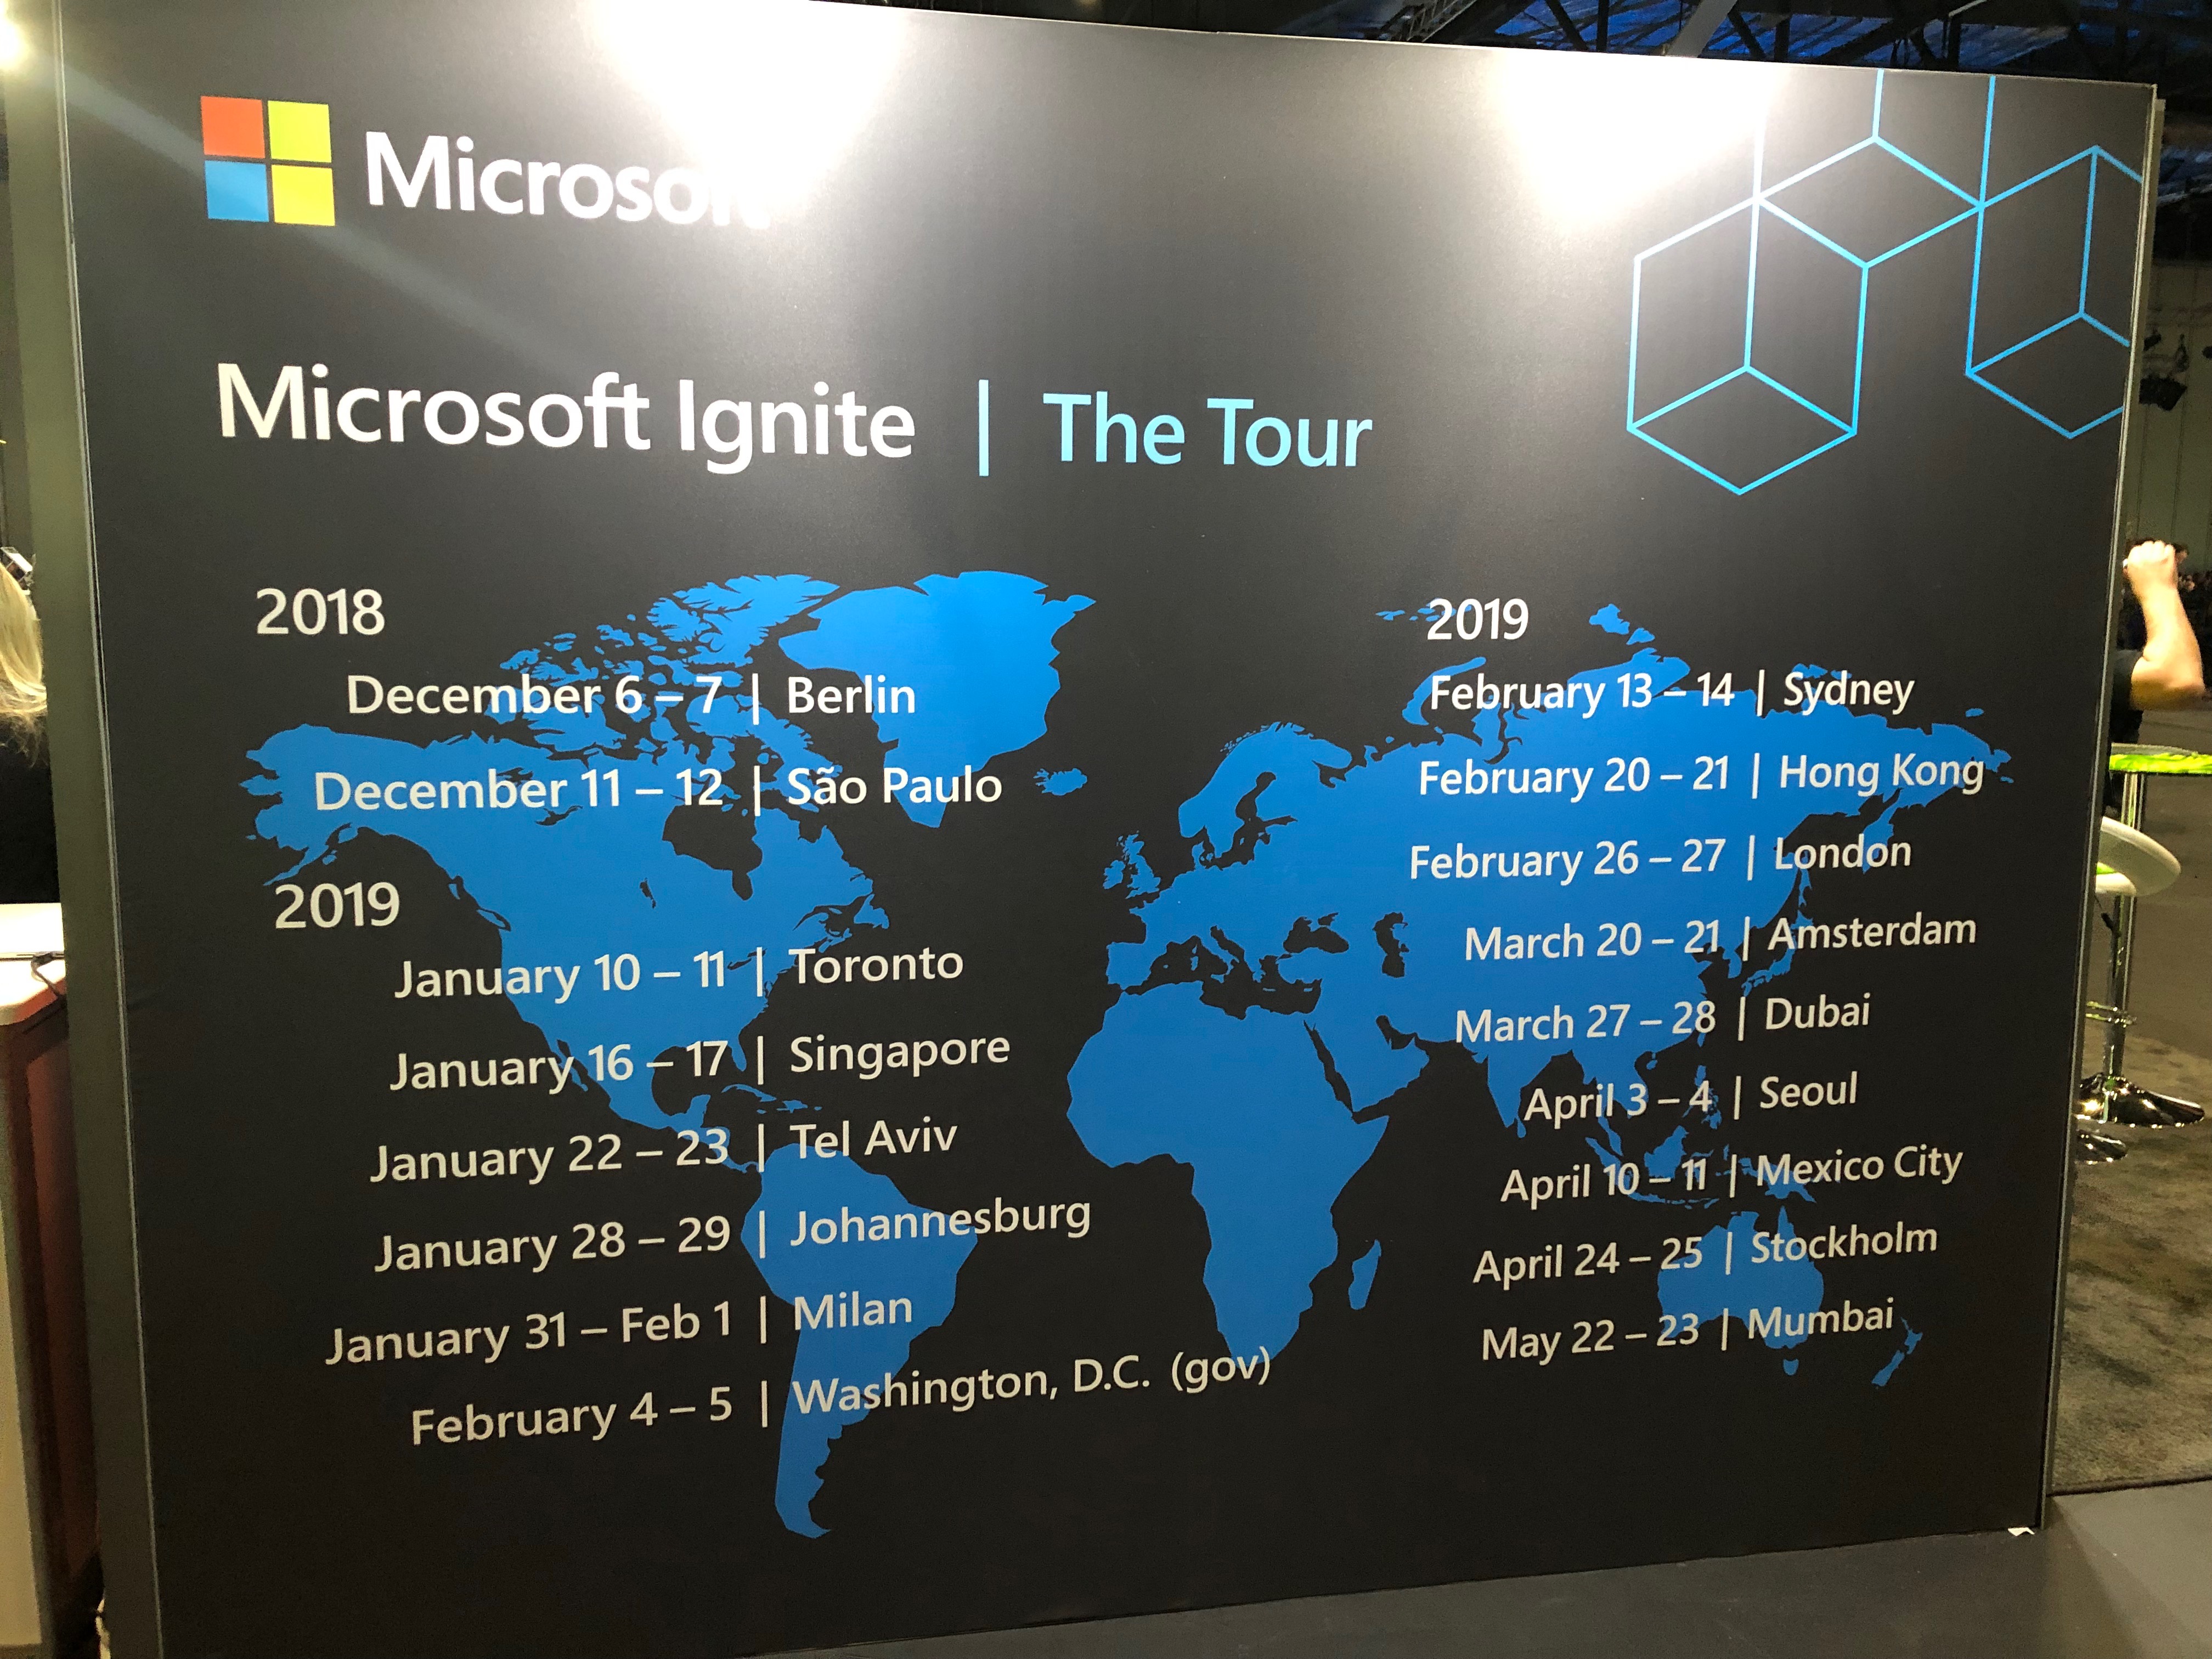 Microsoft Ignite tour dates